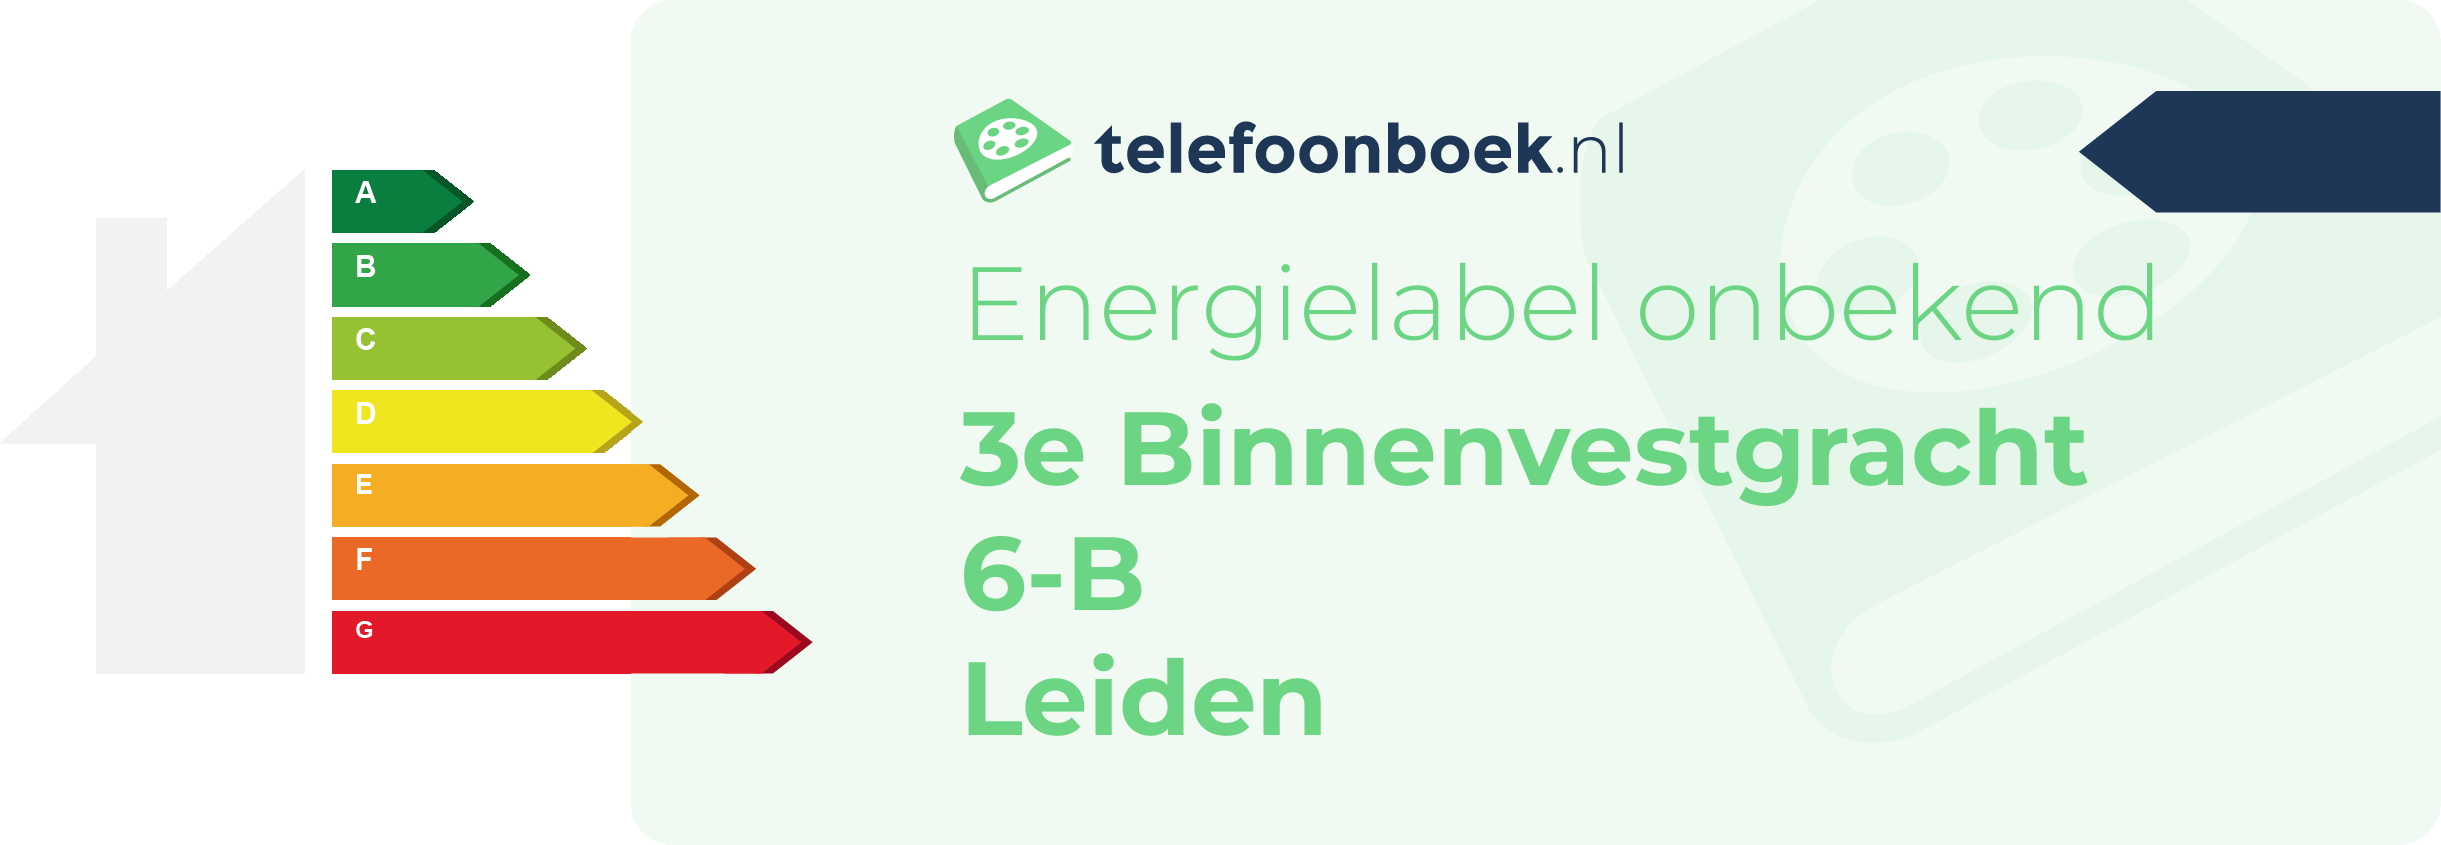 Energielabel 3e Binnenvestgracht 6-B Leiden